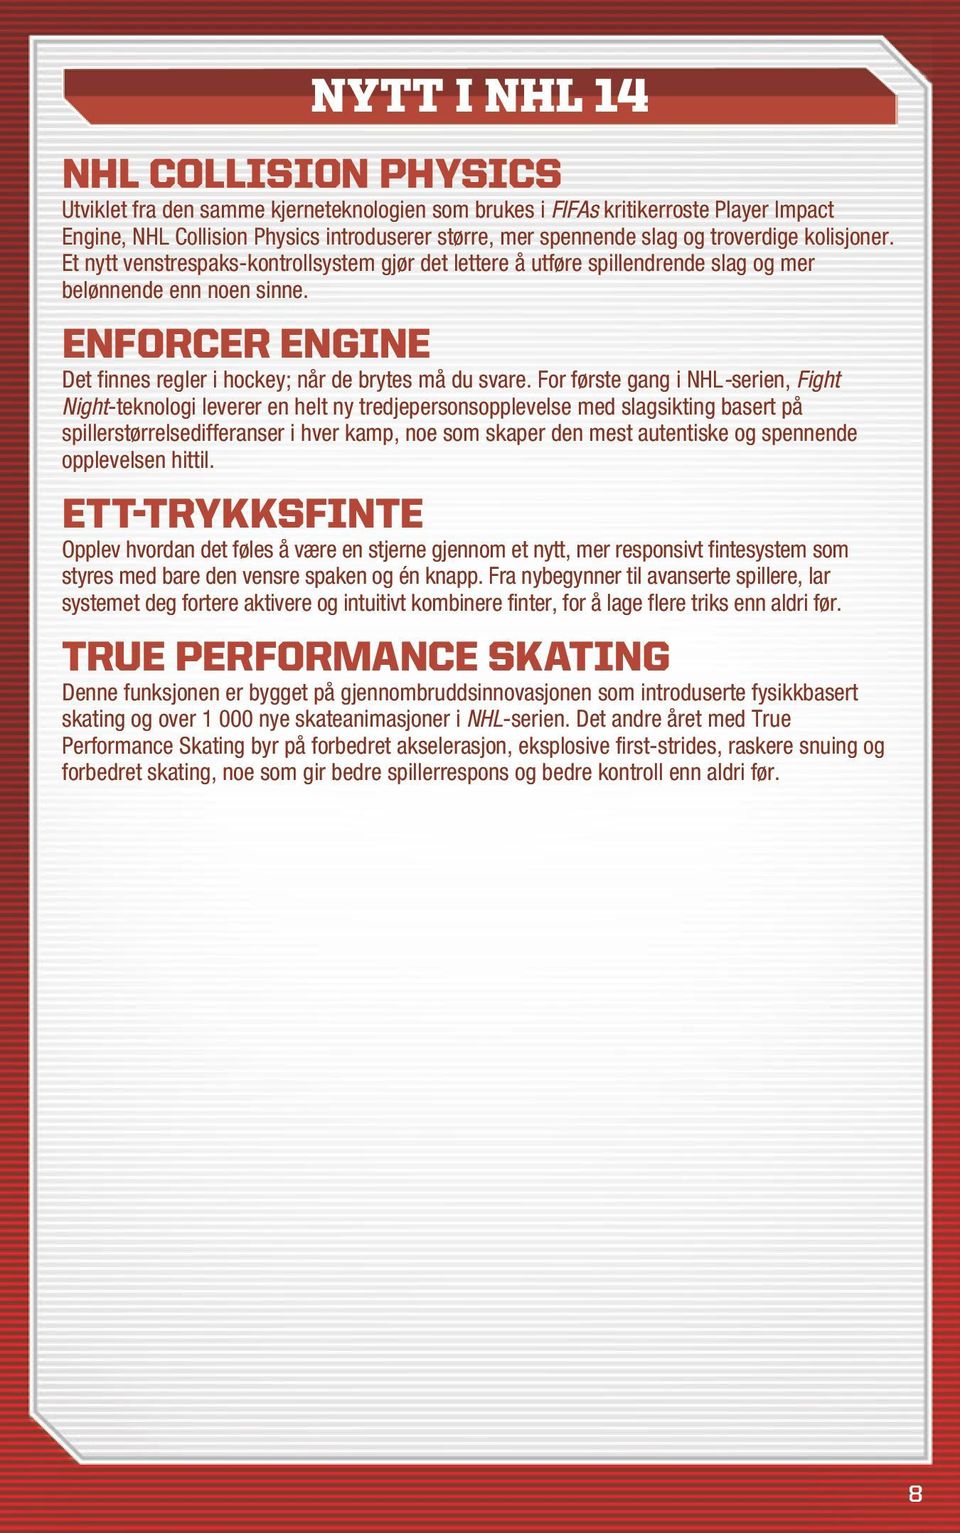 Enforcer Engine Det finnes regler i hockey; når de brytes må du svare.